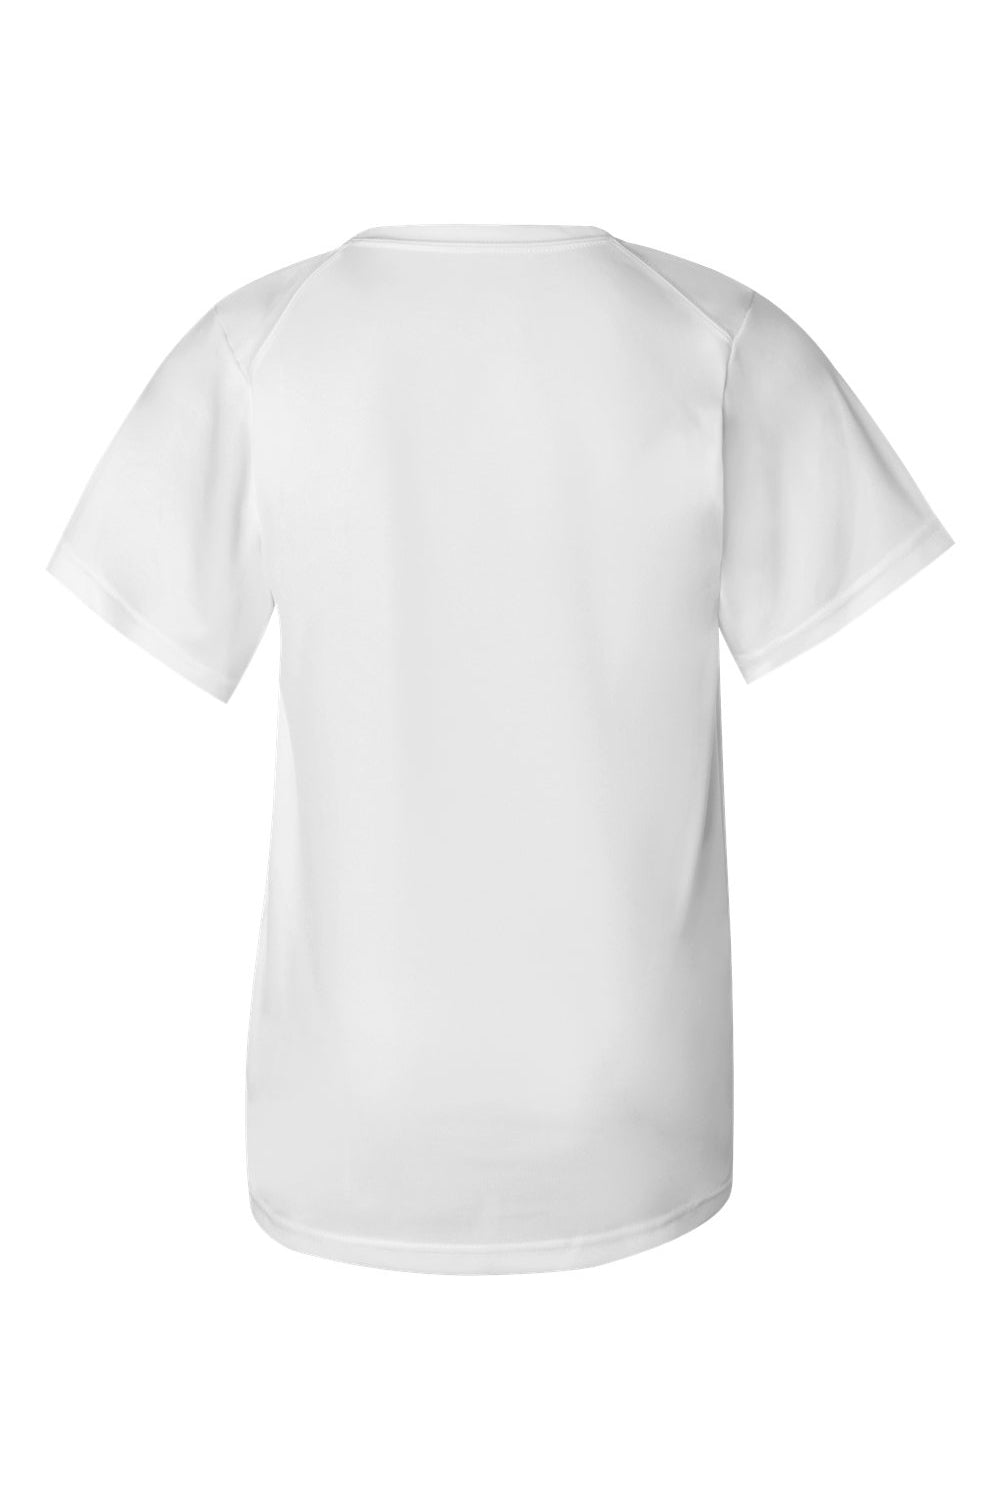 Badger 2120 Youth B-Core Moisture Wicking Short Sleeve Crewneck T-Shirt White Flat Back